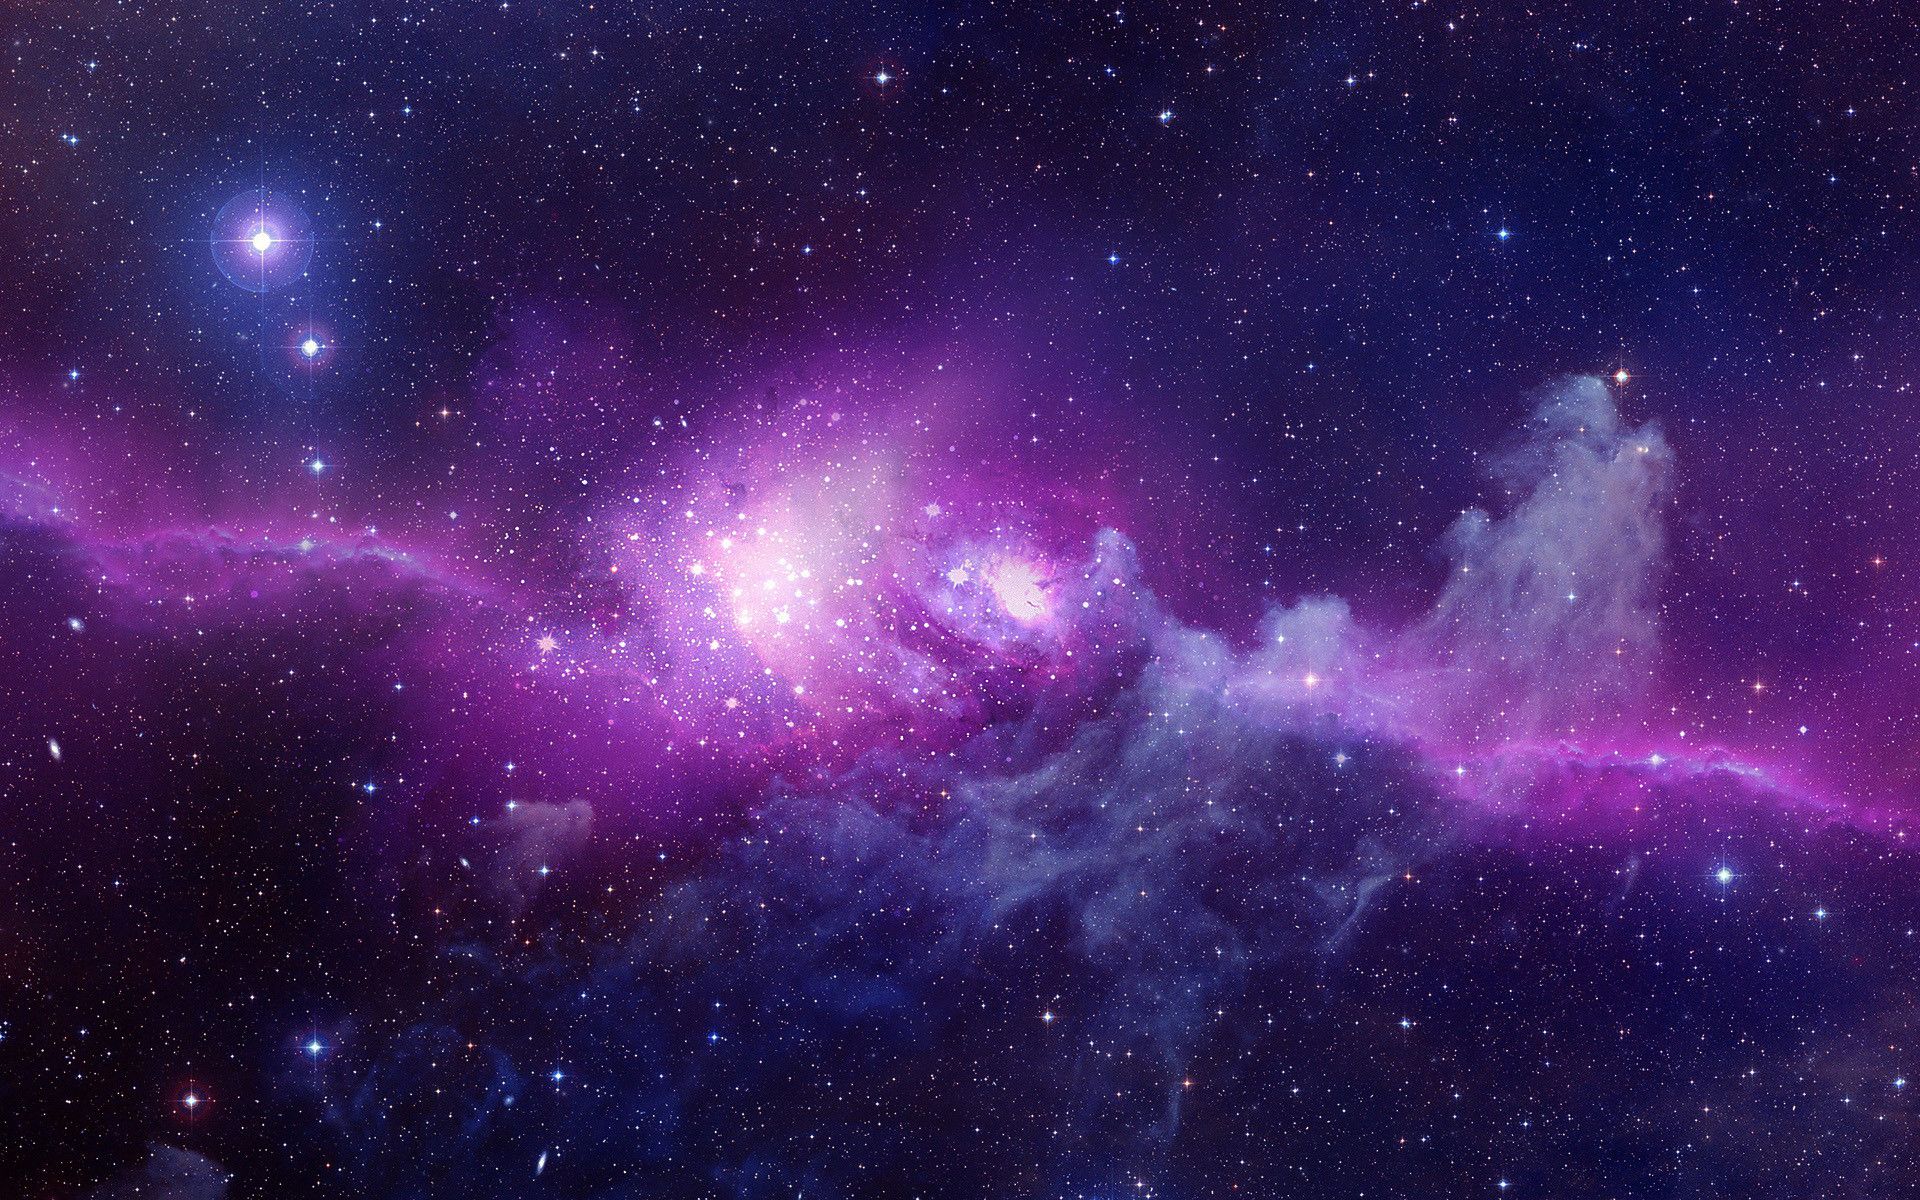 Purple Star Wallpapers